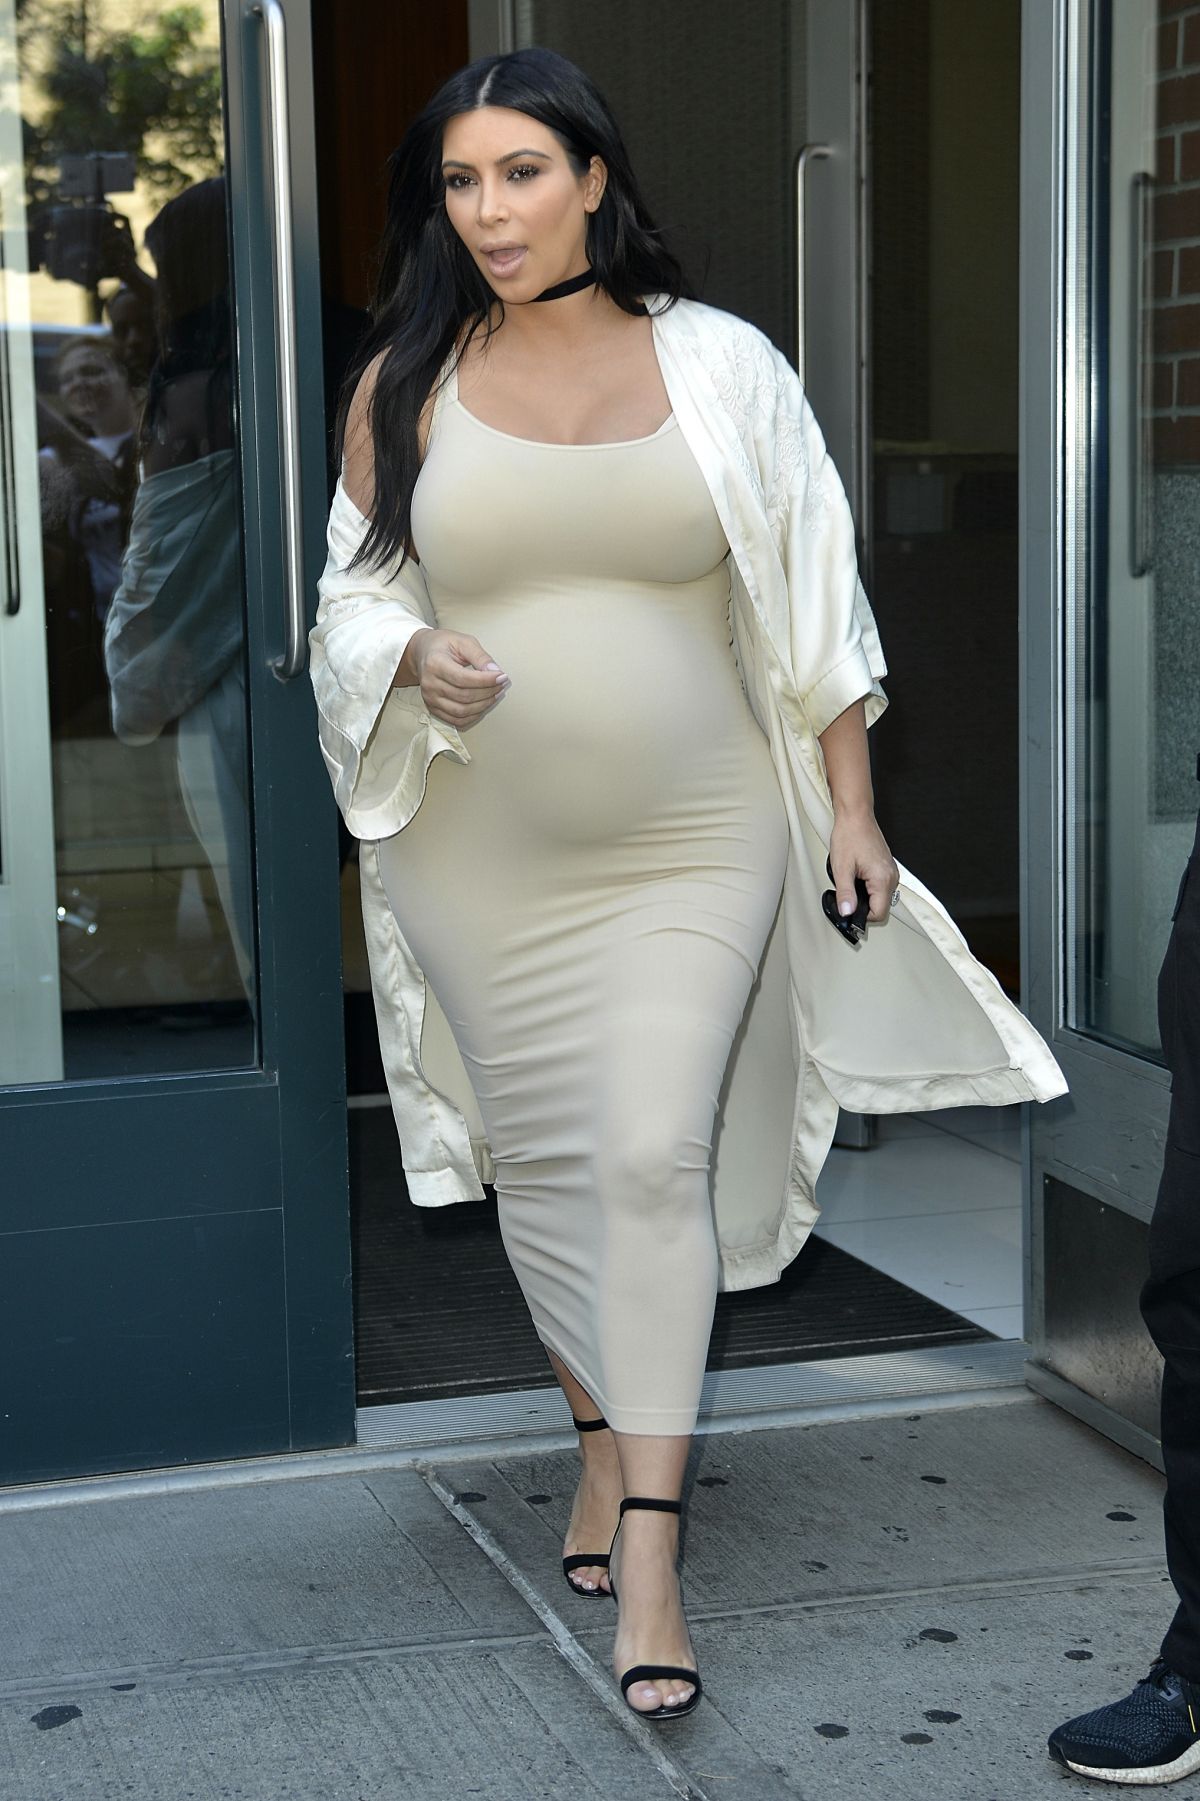 Pregnant Kim Kardashian Leaves Her Apartment In New York 09 13 2015 15 